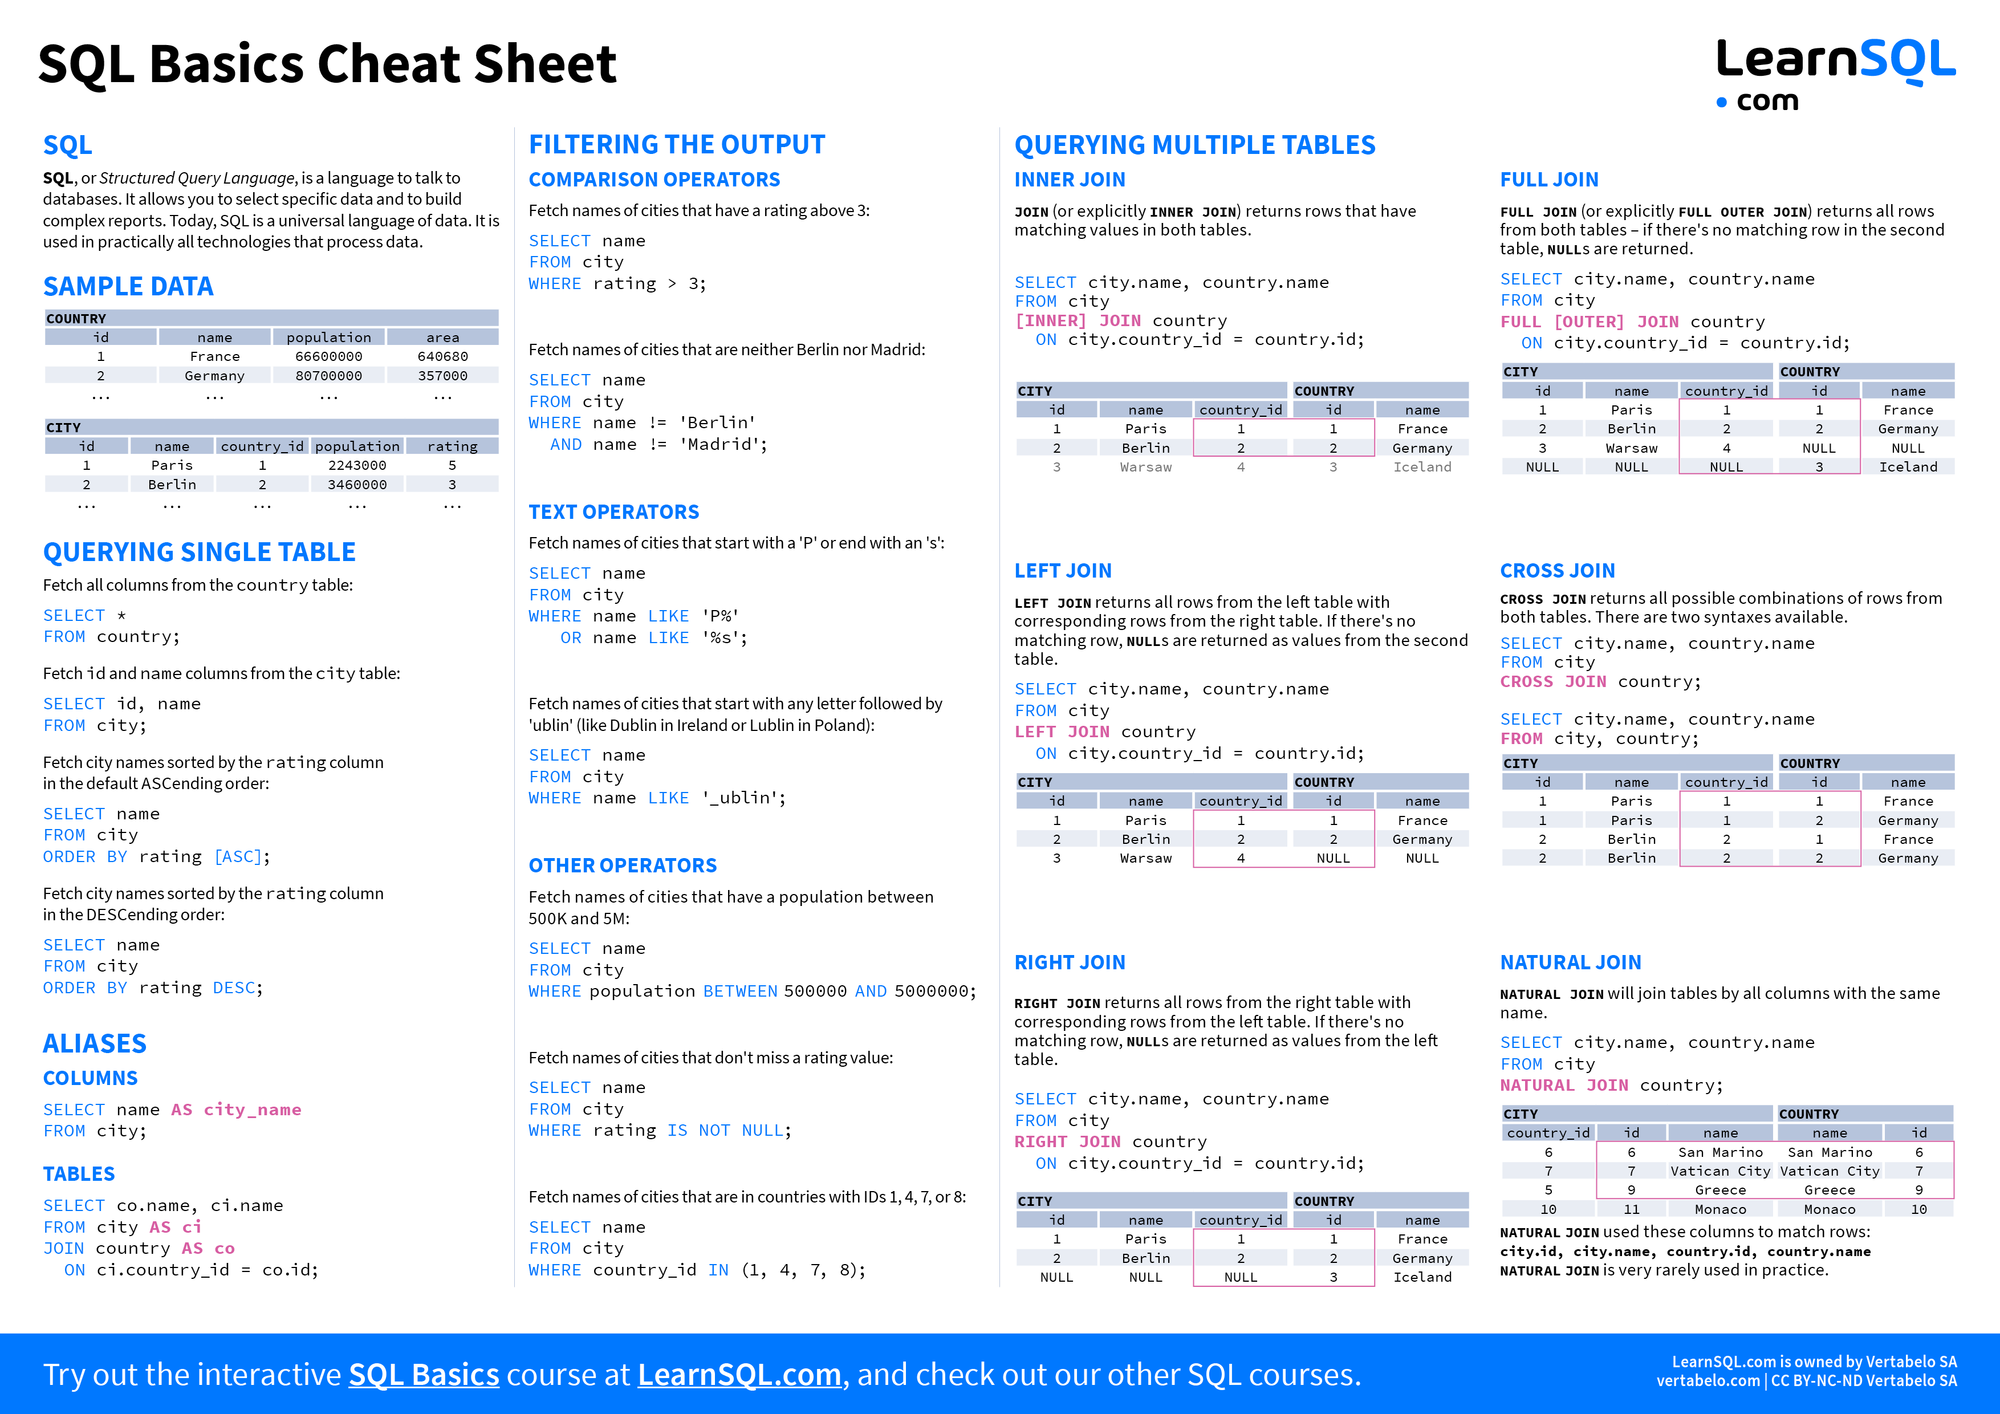 Page 1 of SQL Basics Cheat Sheet